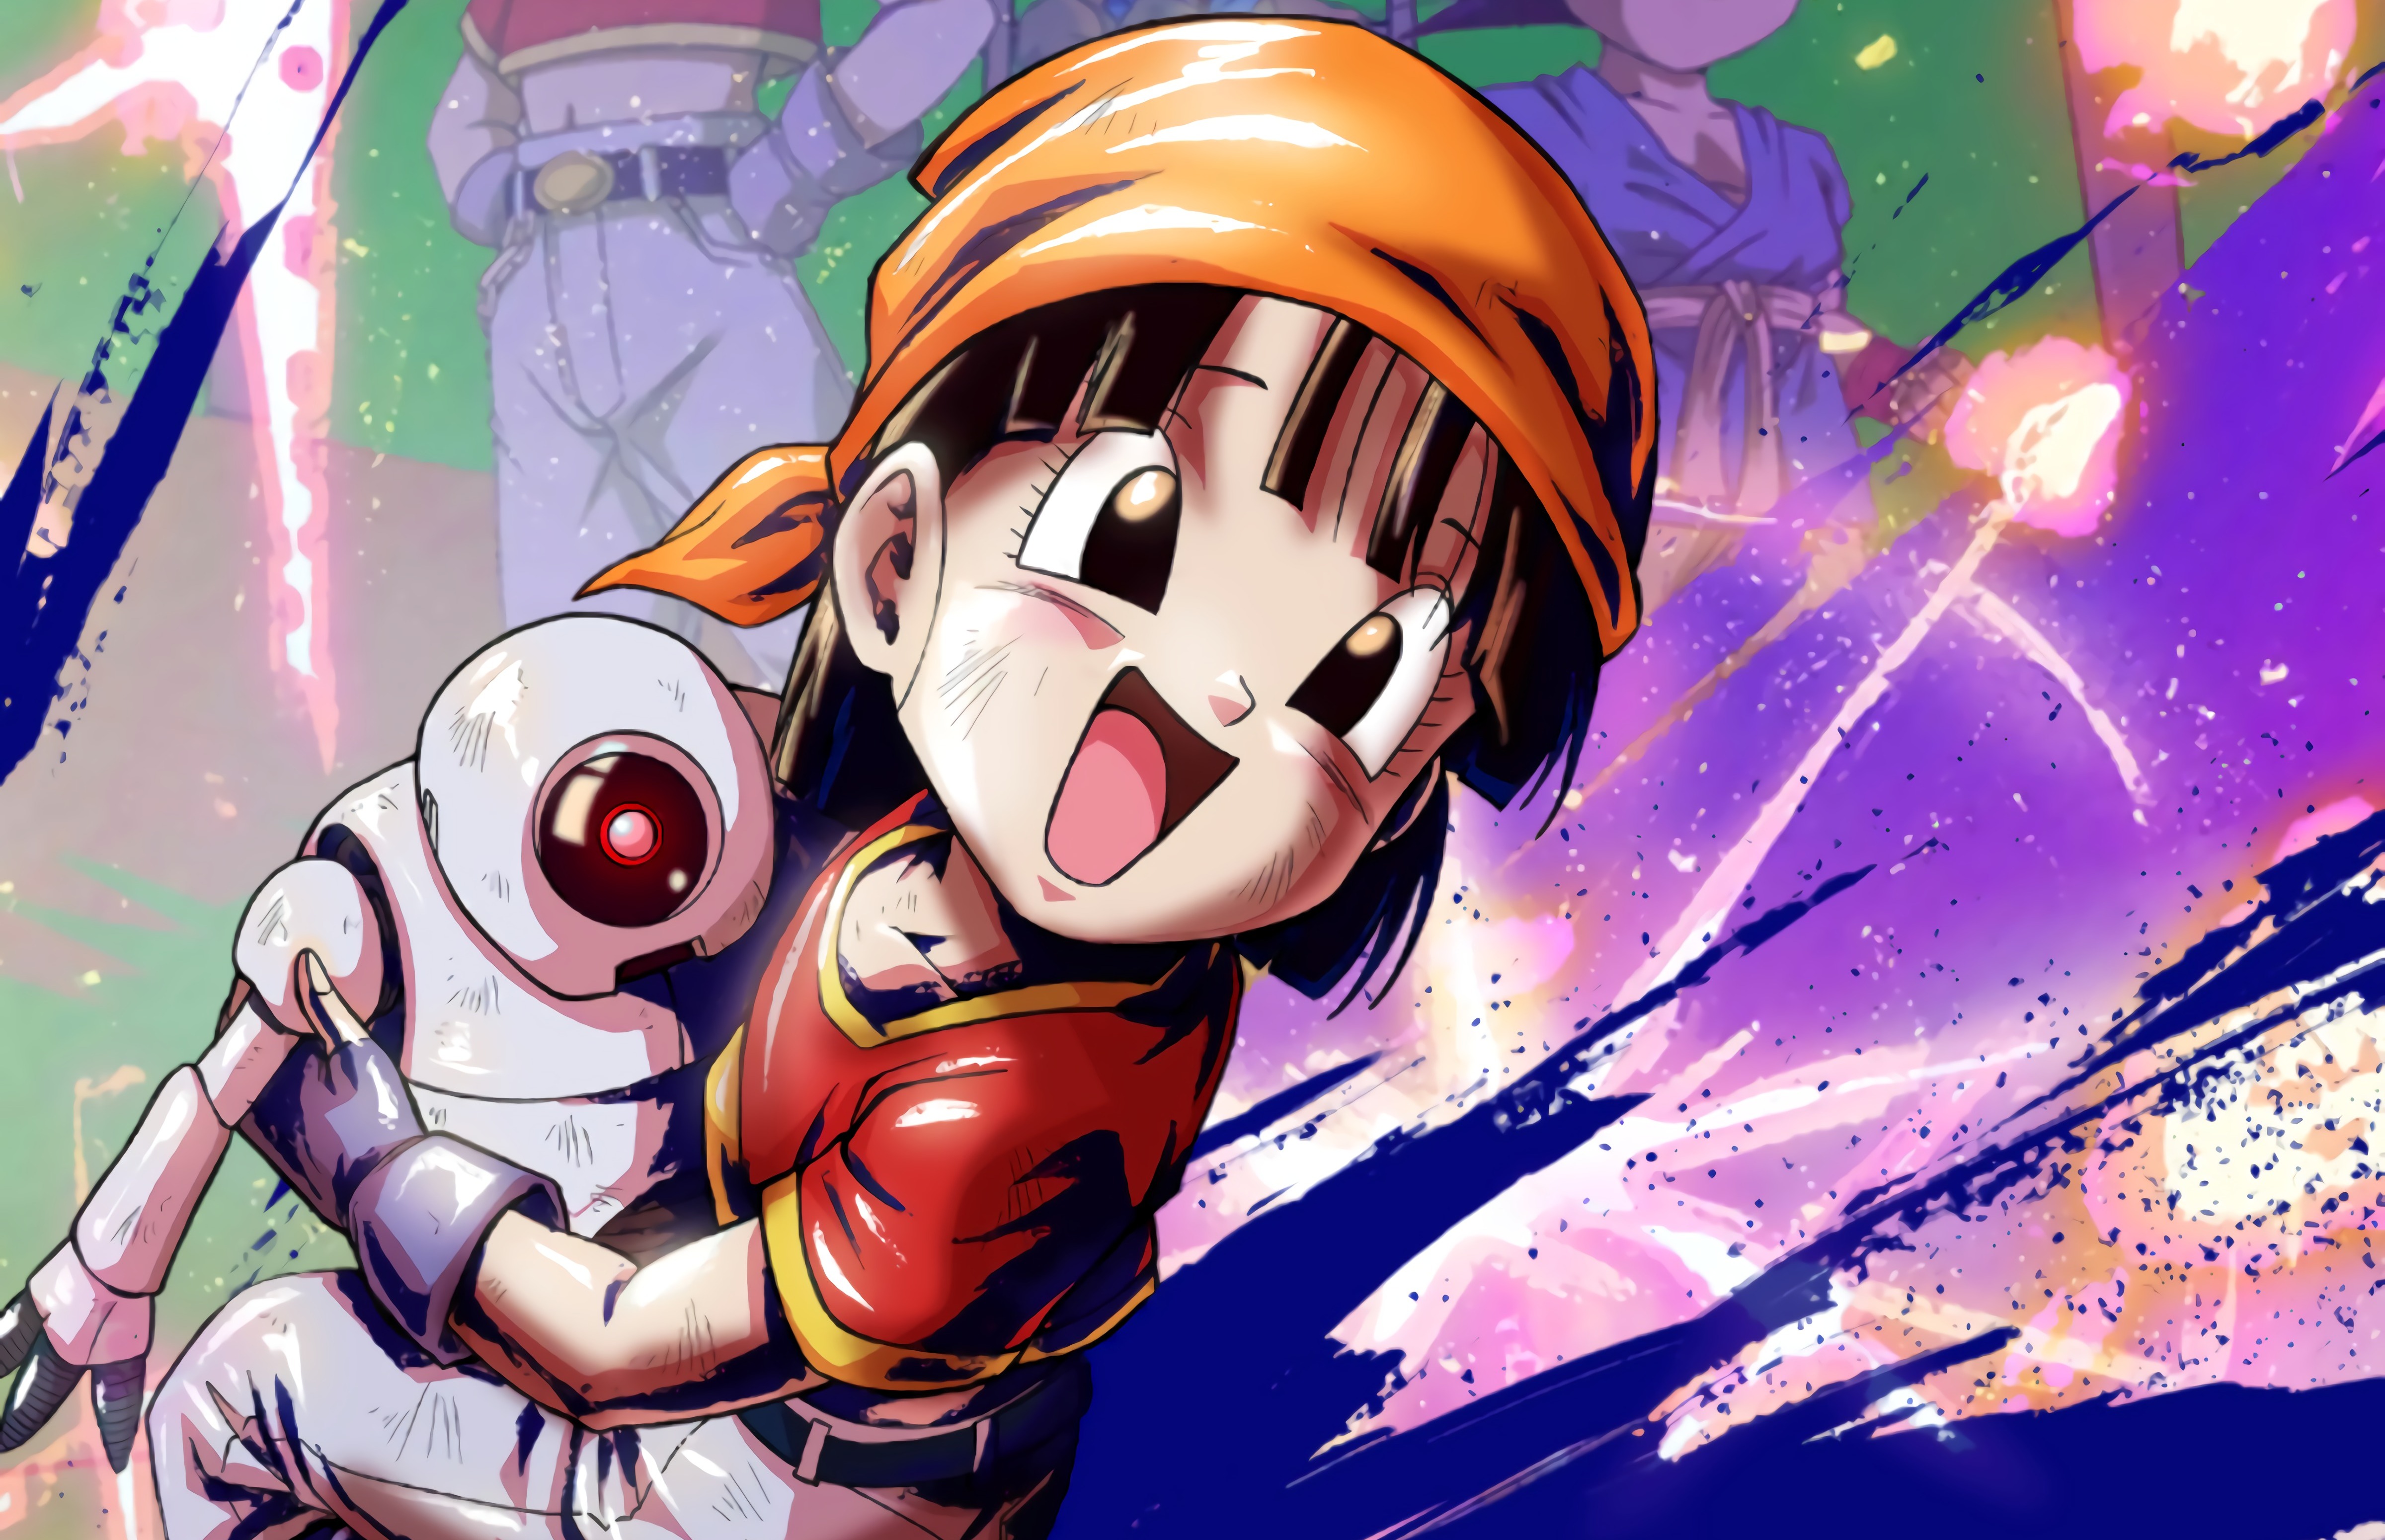 Anime Dragon Ball GT 4k Ultra HD Wallpaper